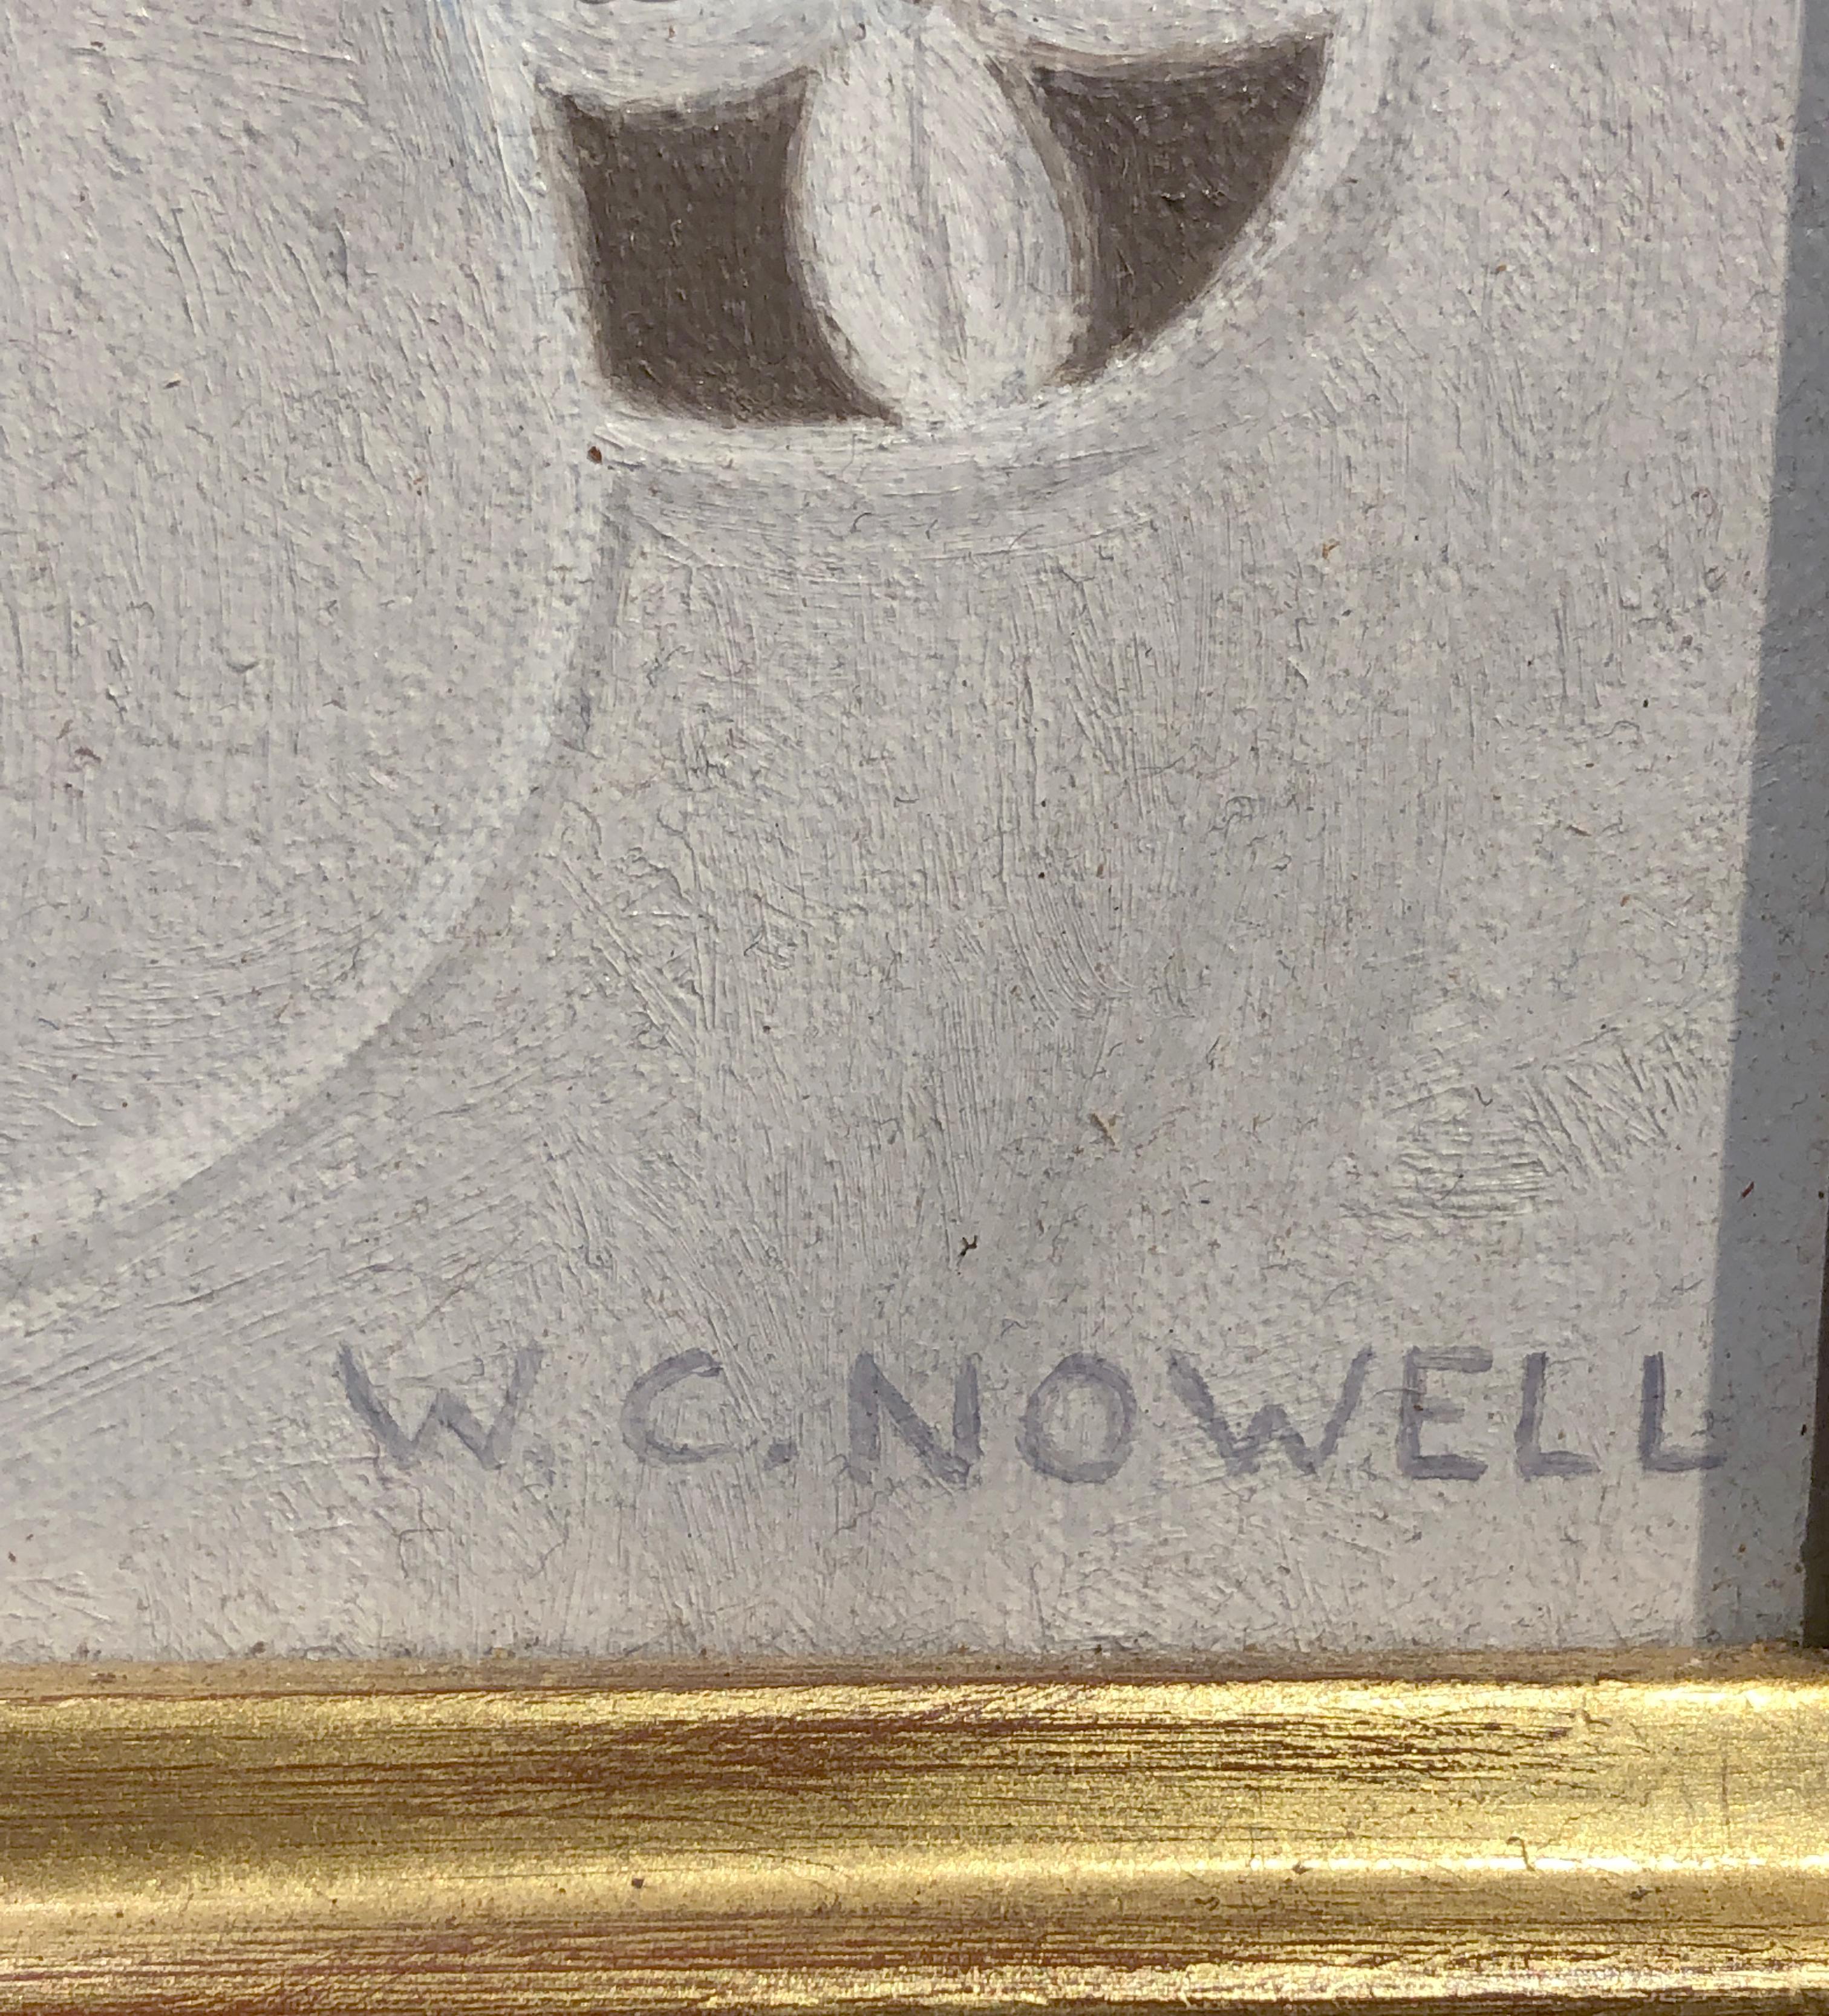 W.C. Nowell, 